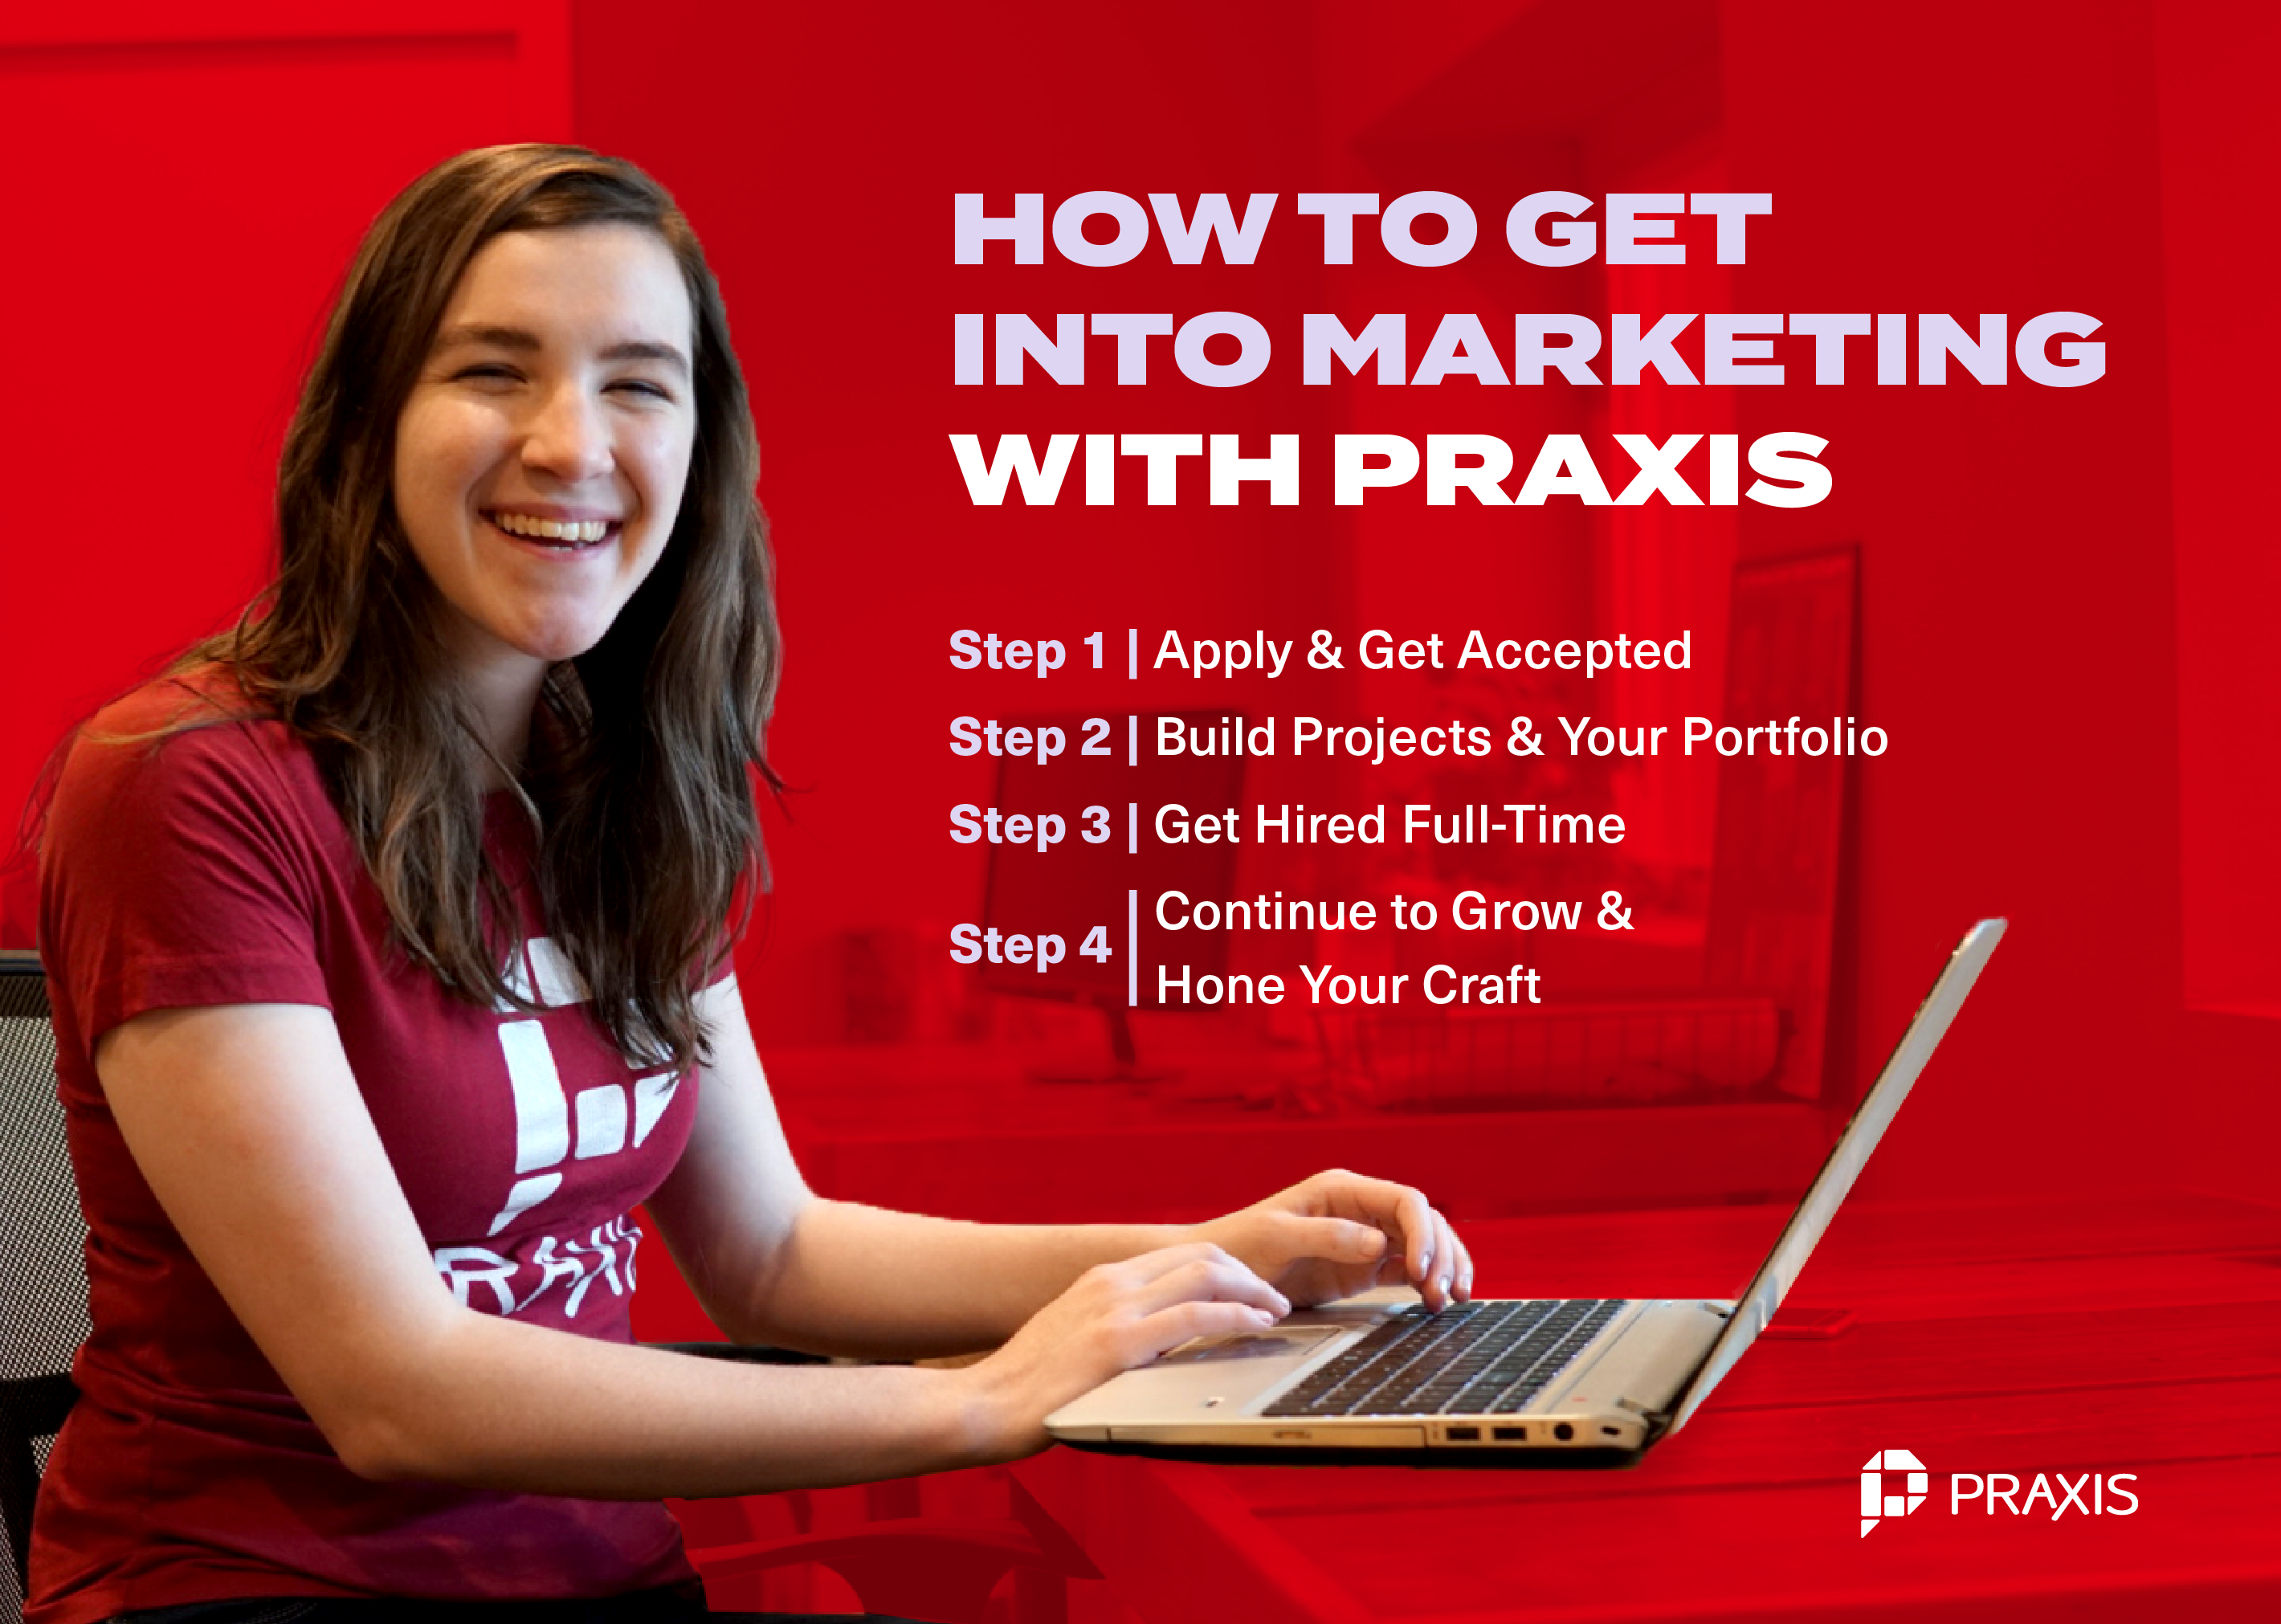 Marketing Career Path Three: Praxis